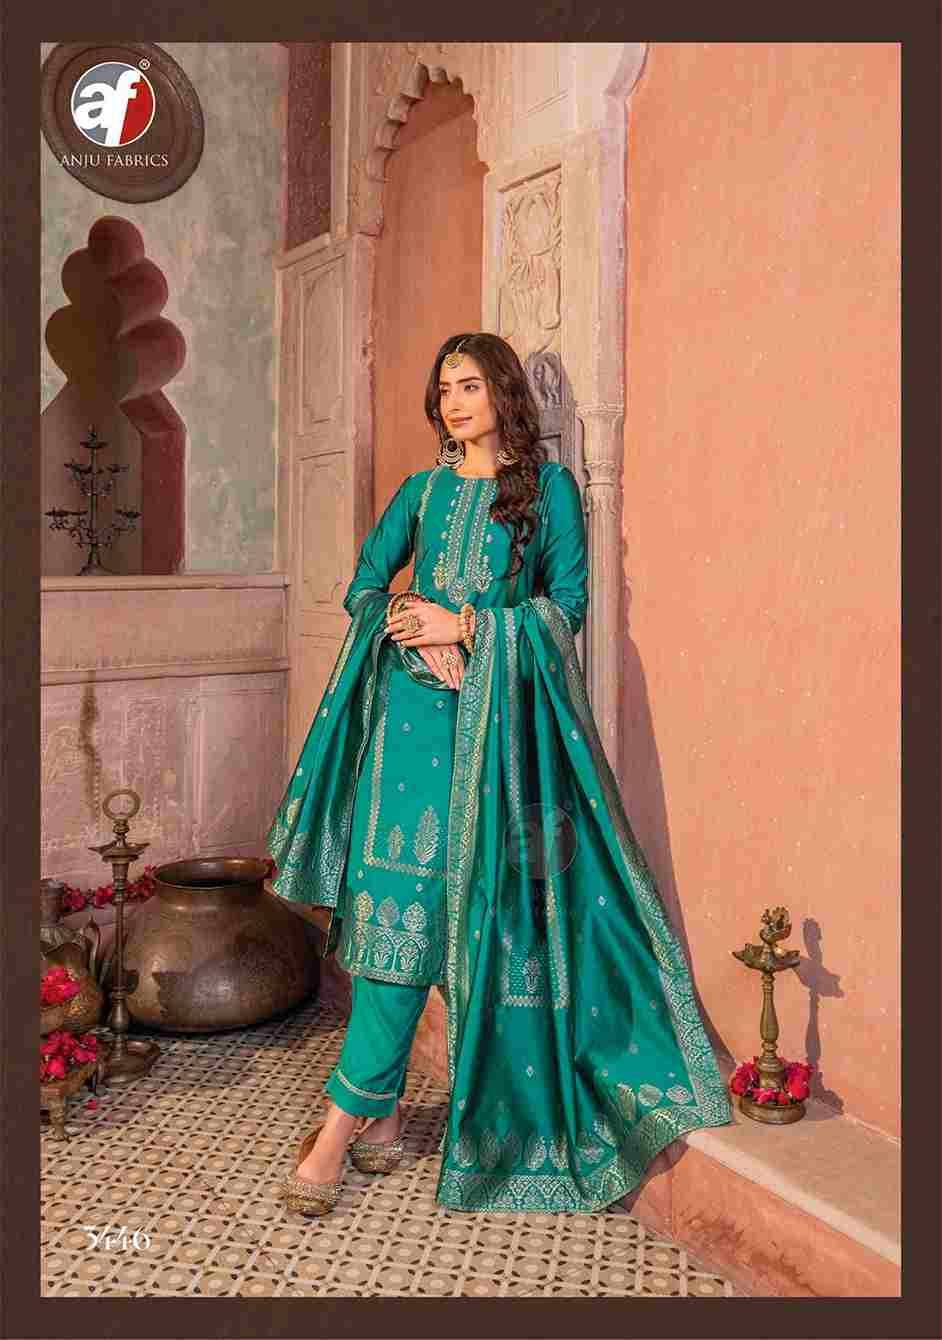 Silk Affair Vol-3 By Anju Fabrics 3441 To 3446 Series Beautiful Festive Suits Colorful Stylish Fancy Casual Wear & Ethnic Wear Jacquard Banarasi Silk Dresses At Wholesale Price